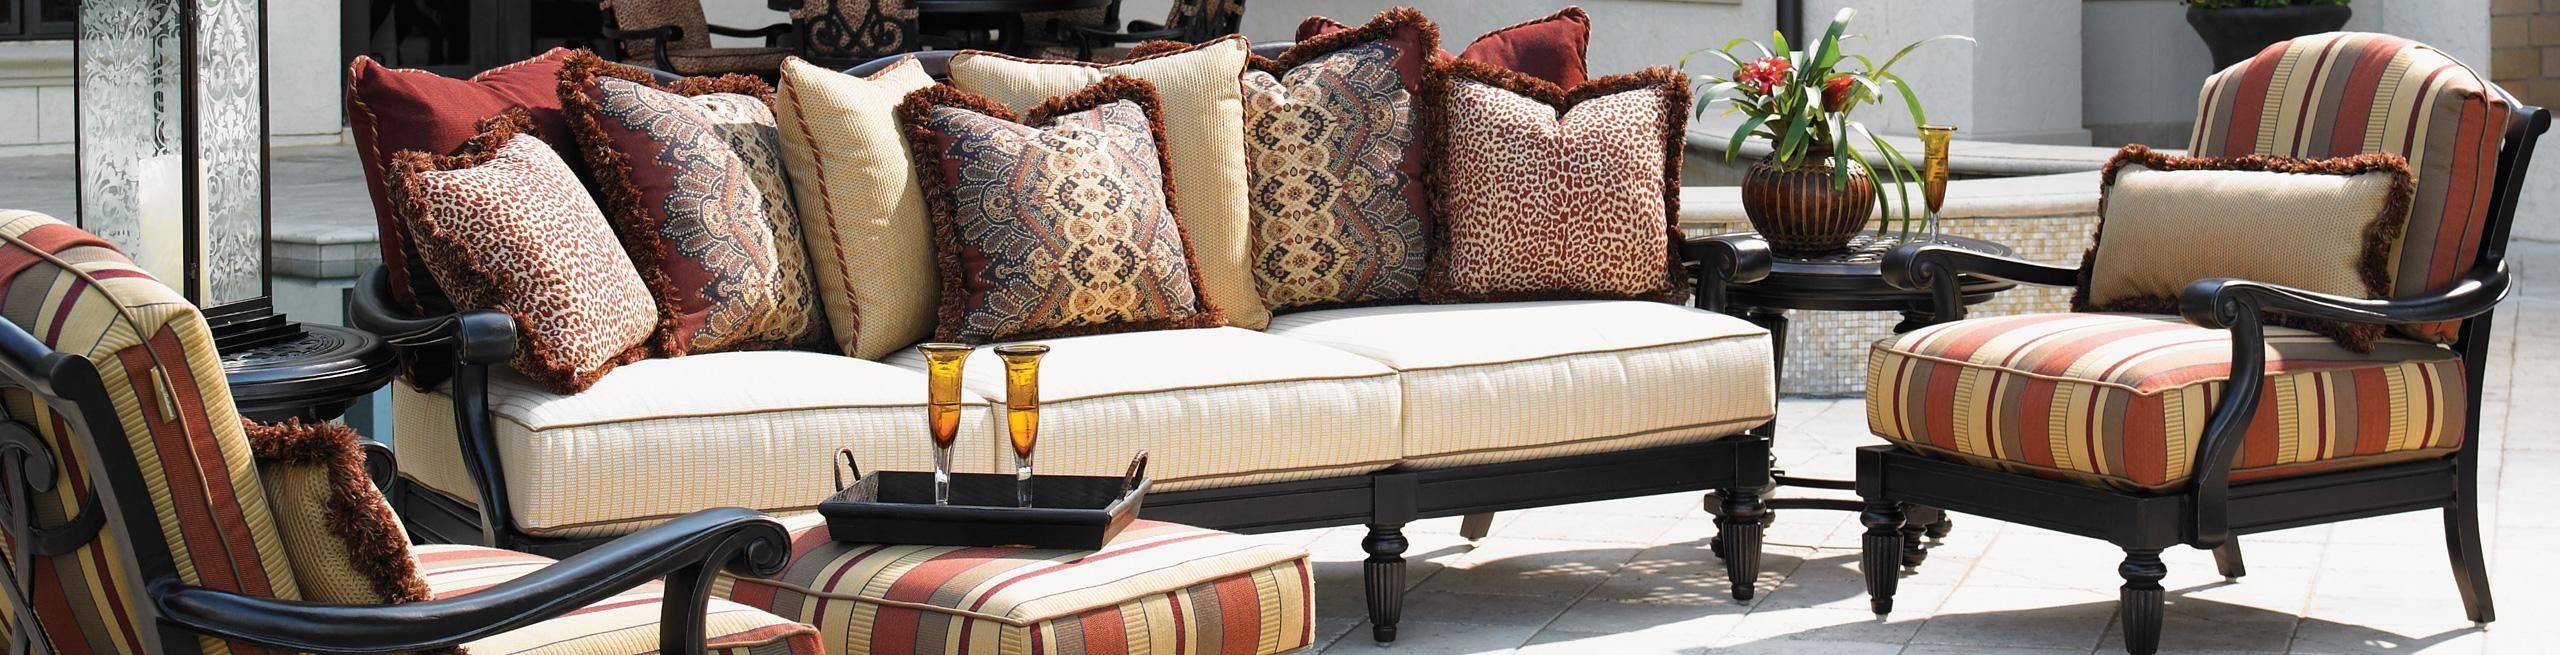 Outdoor Patio Furniture: Deep Seating Outdoor Patio Furniture Regarding Deep Cushion Sofa (View 15 of 20)